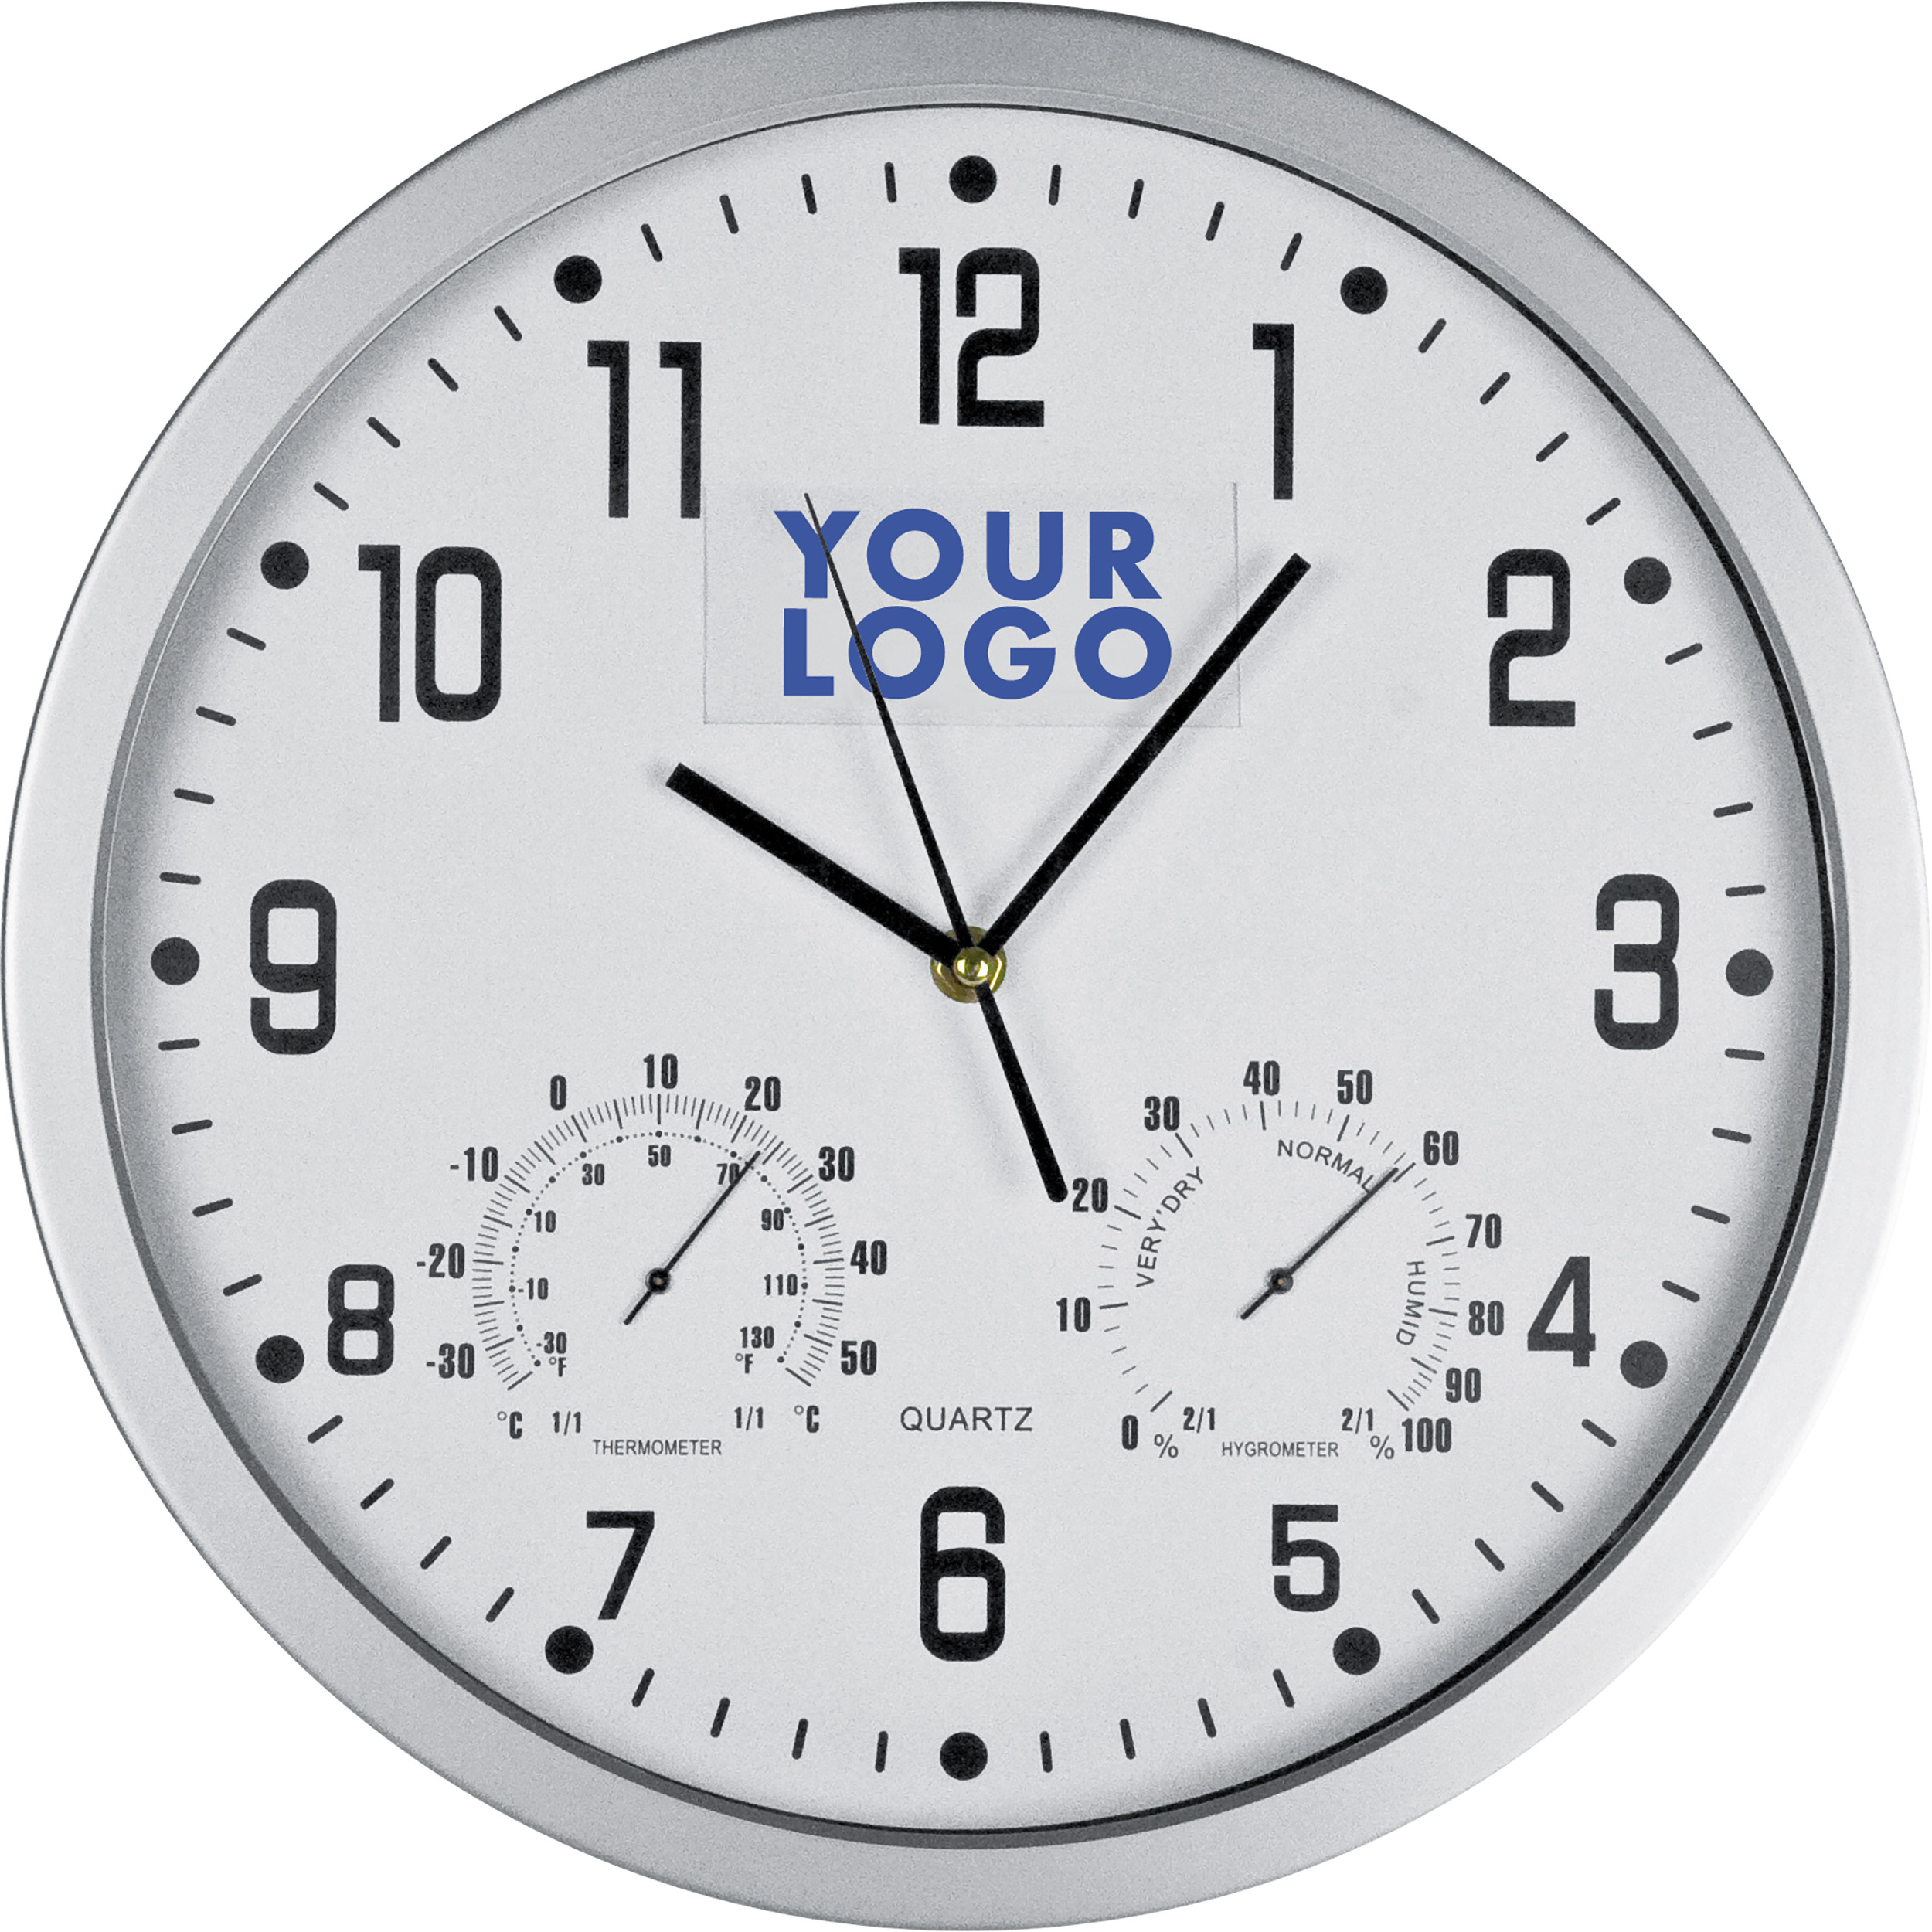 Часы с пароходом. Часы настенные Tempus fugit. Часы настенные Insert 2, белые. Часы настенные Масма Олимп с термометром и гигрометром. Часы настенные с термометром и гигрометром b&s SHC-301 CSP (W).